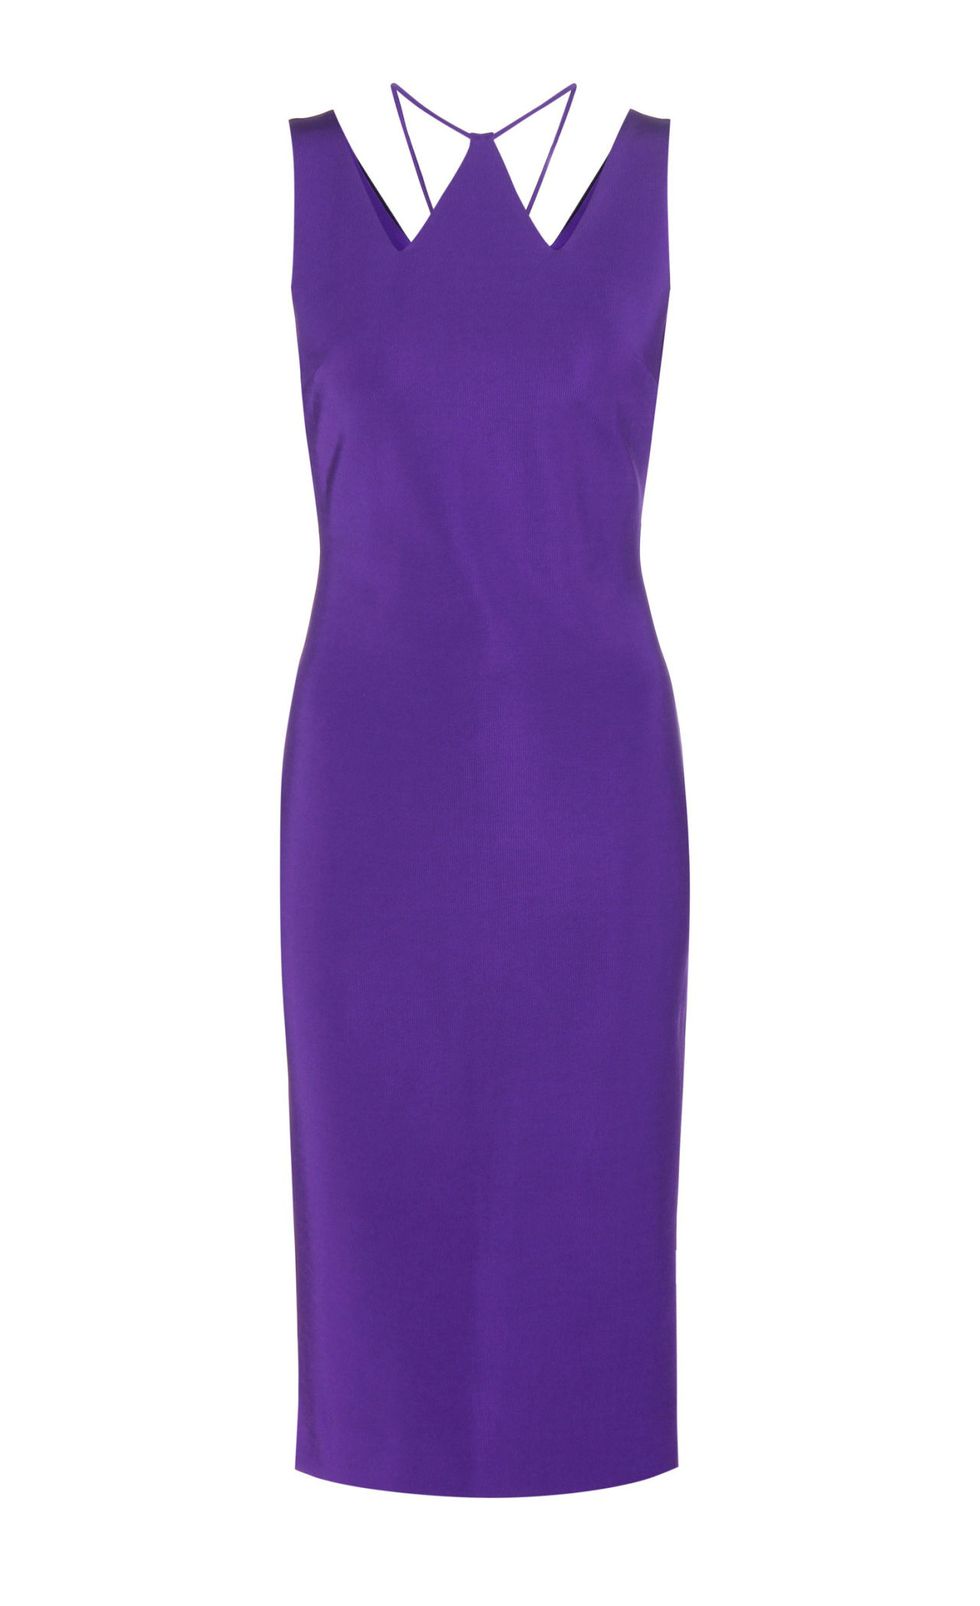 Sleeve, Purple, Dress, One-piece garment, Formal wear, Lavender, Violet, Magenta, Electric blue, Day dress, 